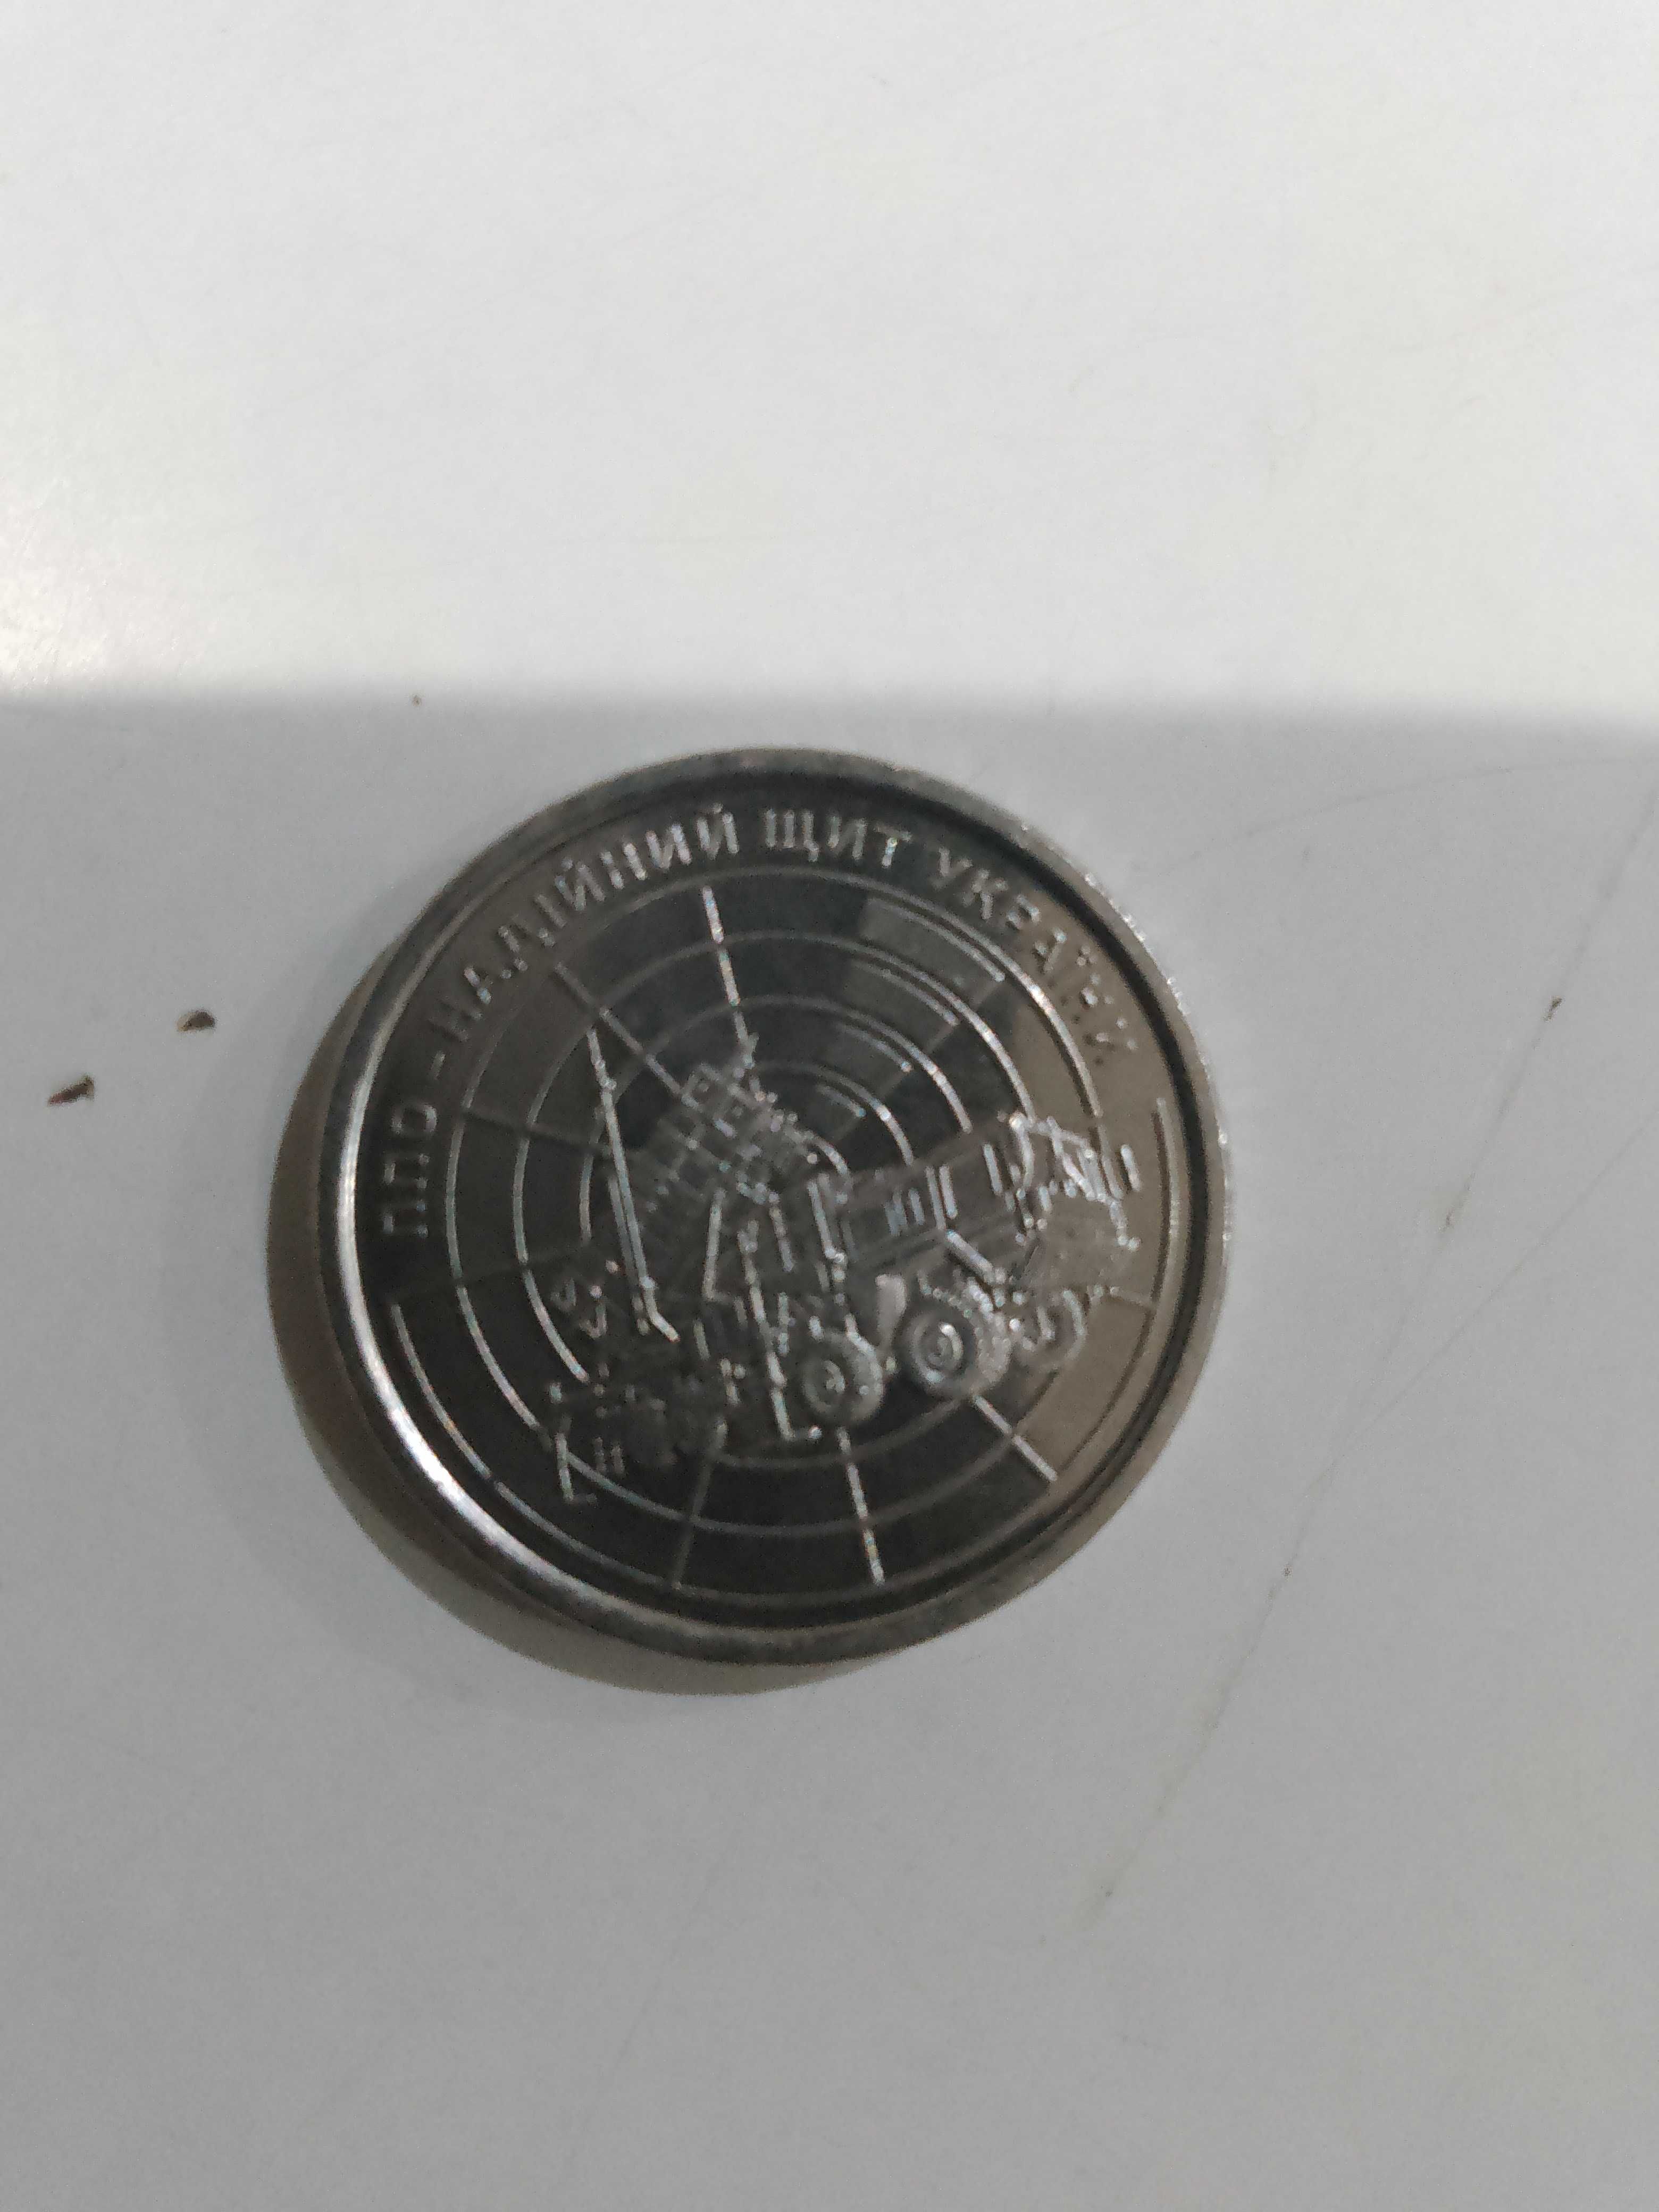 Монета 10 гривень ППО